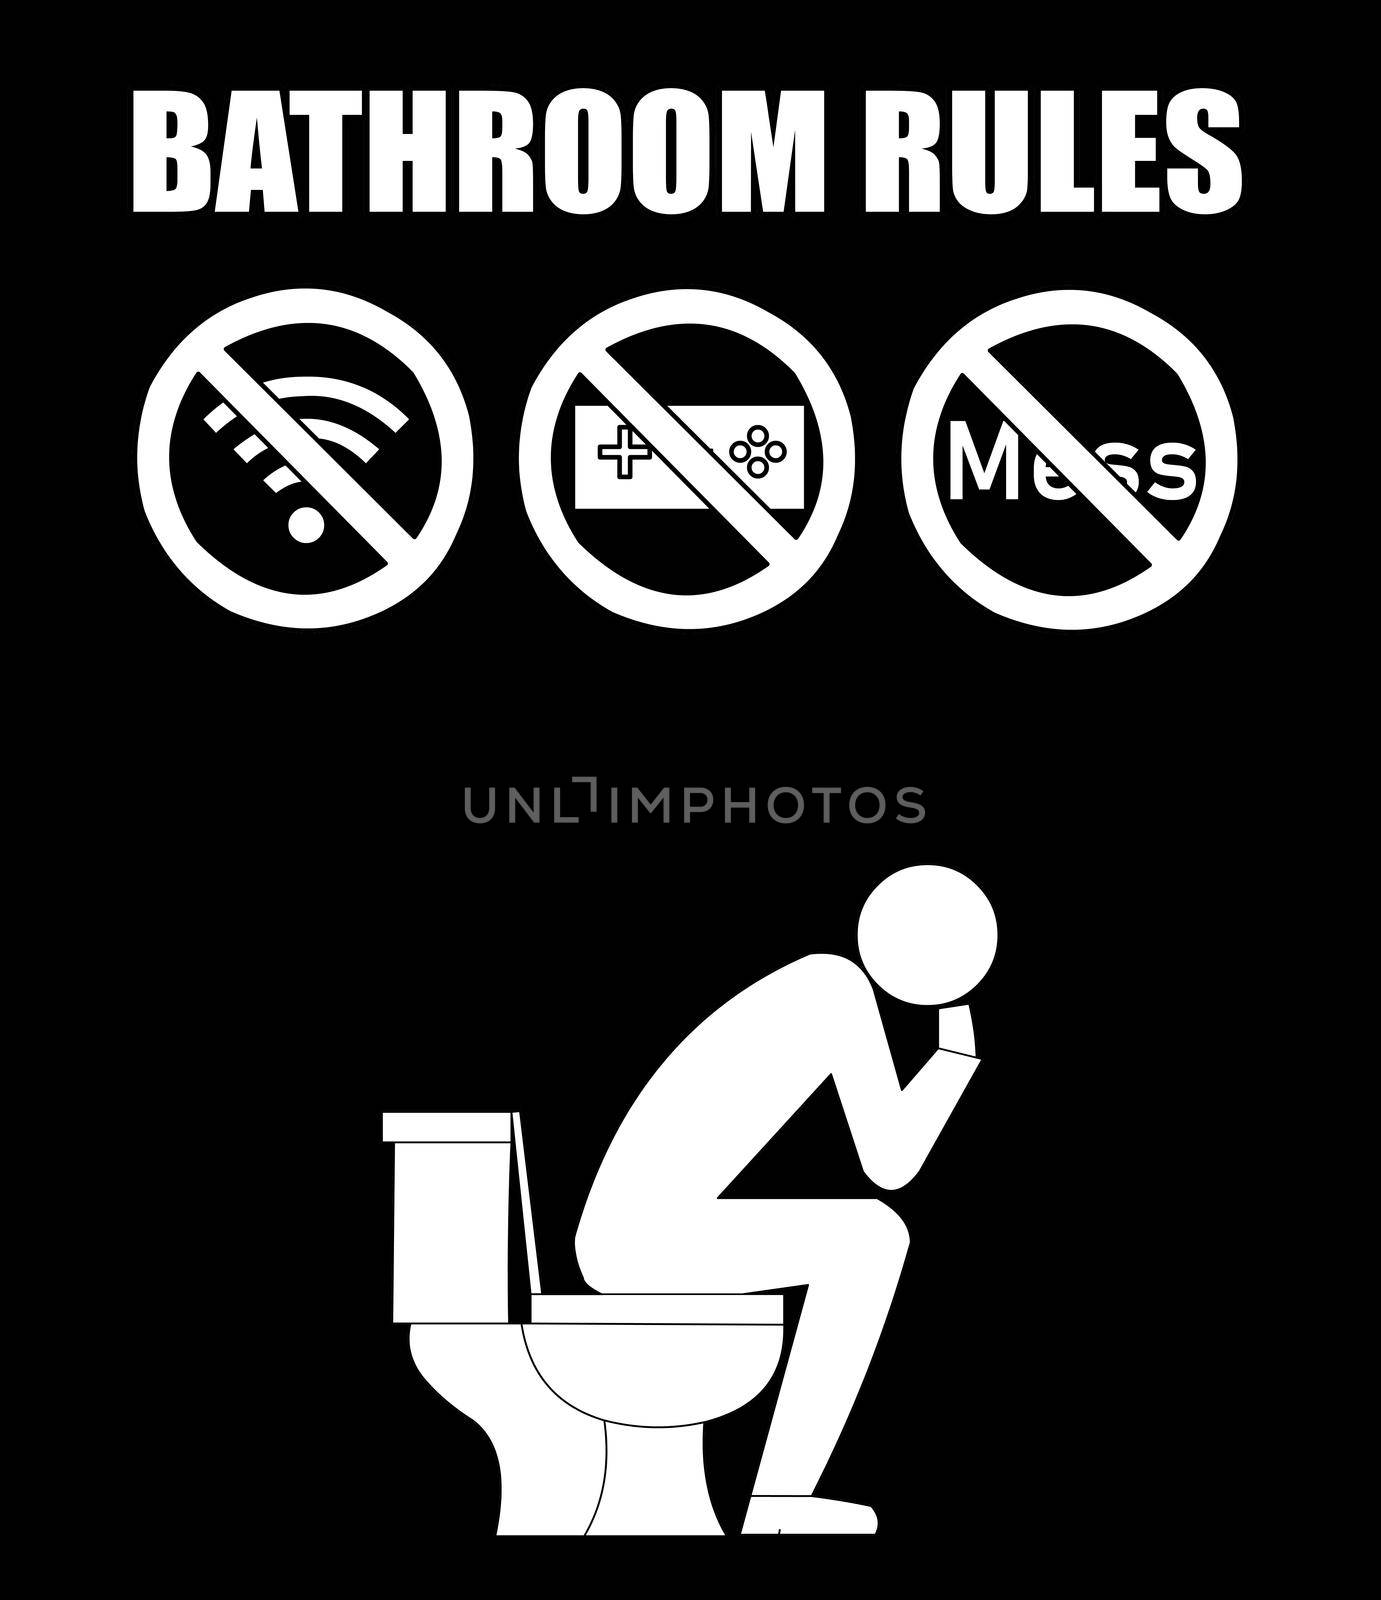 A Set of Bathroom Rules